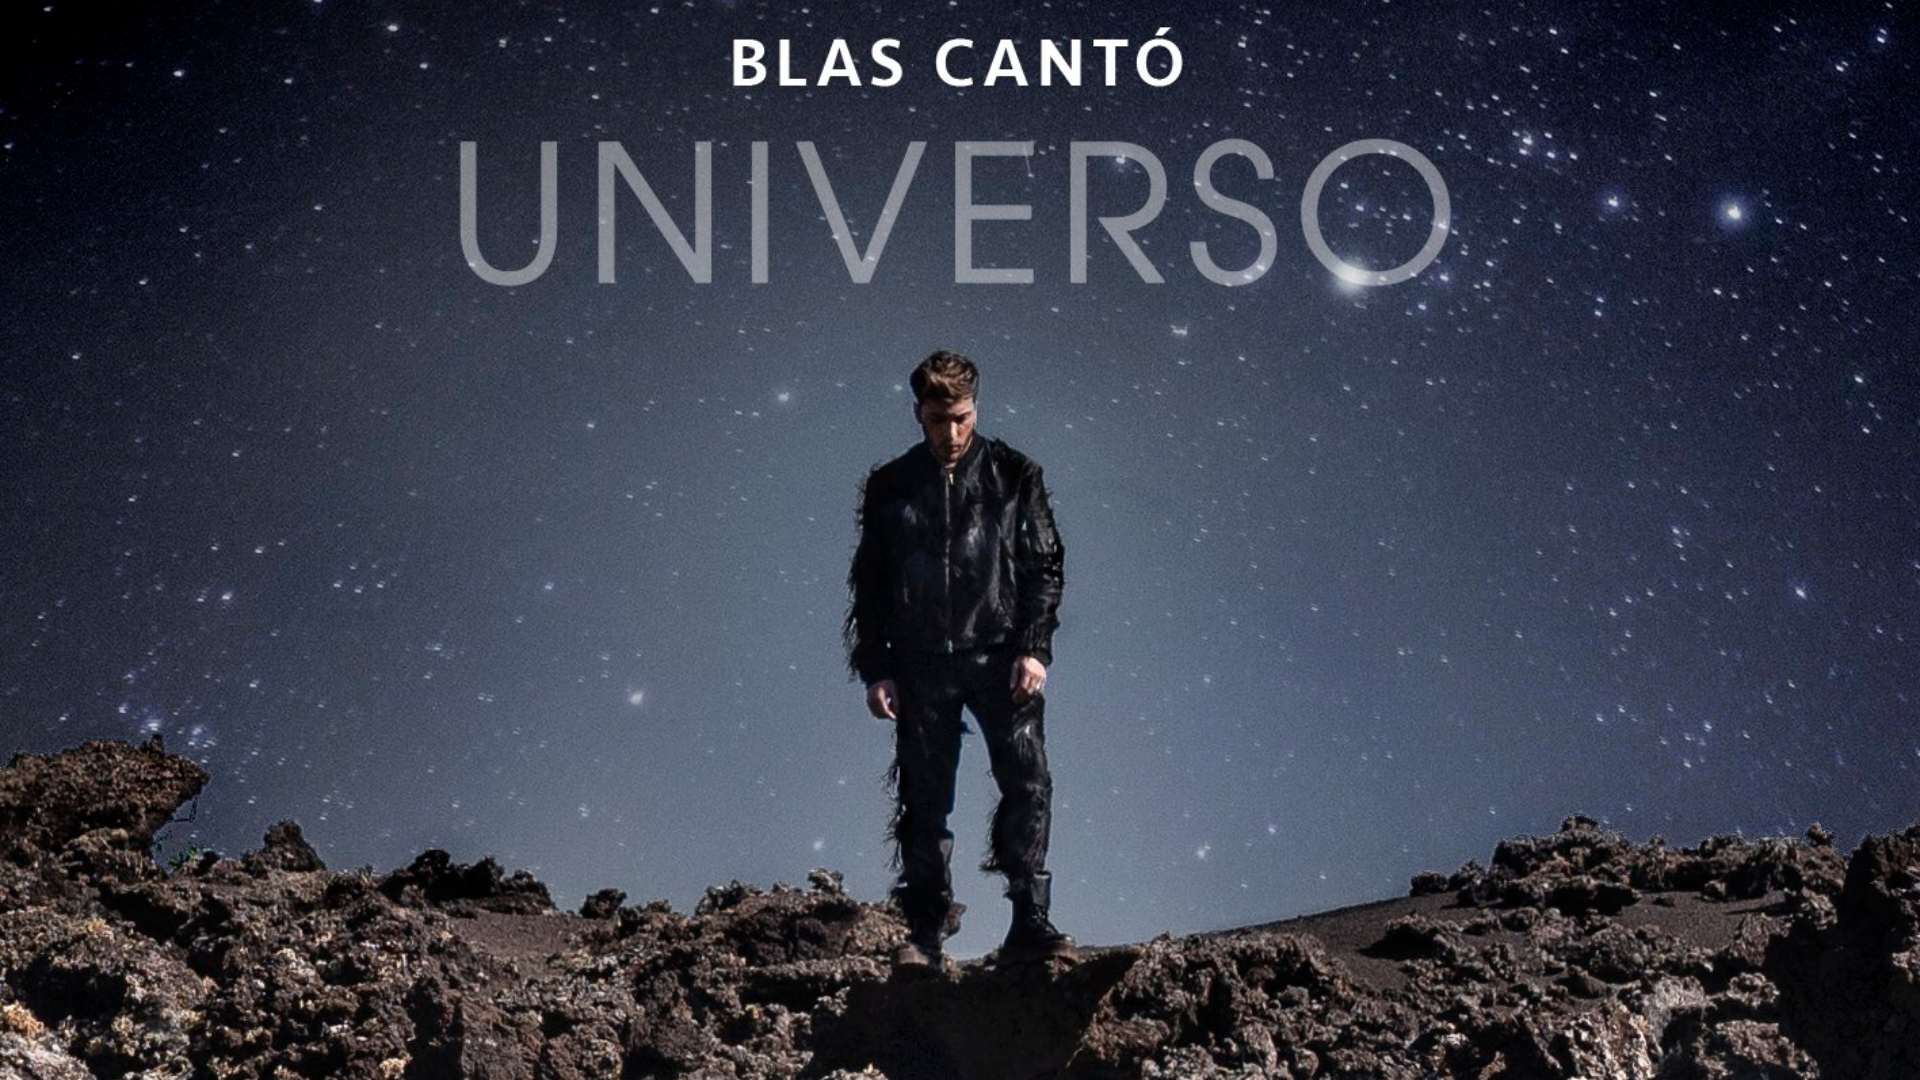 Eurovisión 2020: se presenta ‘Universo’ interpretado por Blas Cantó